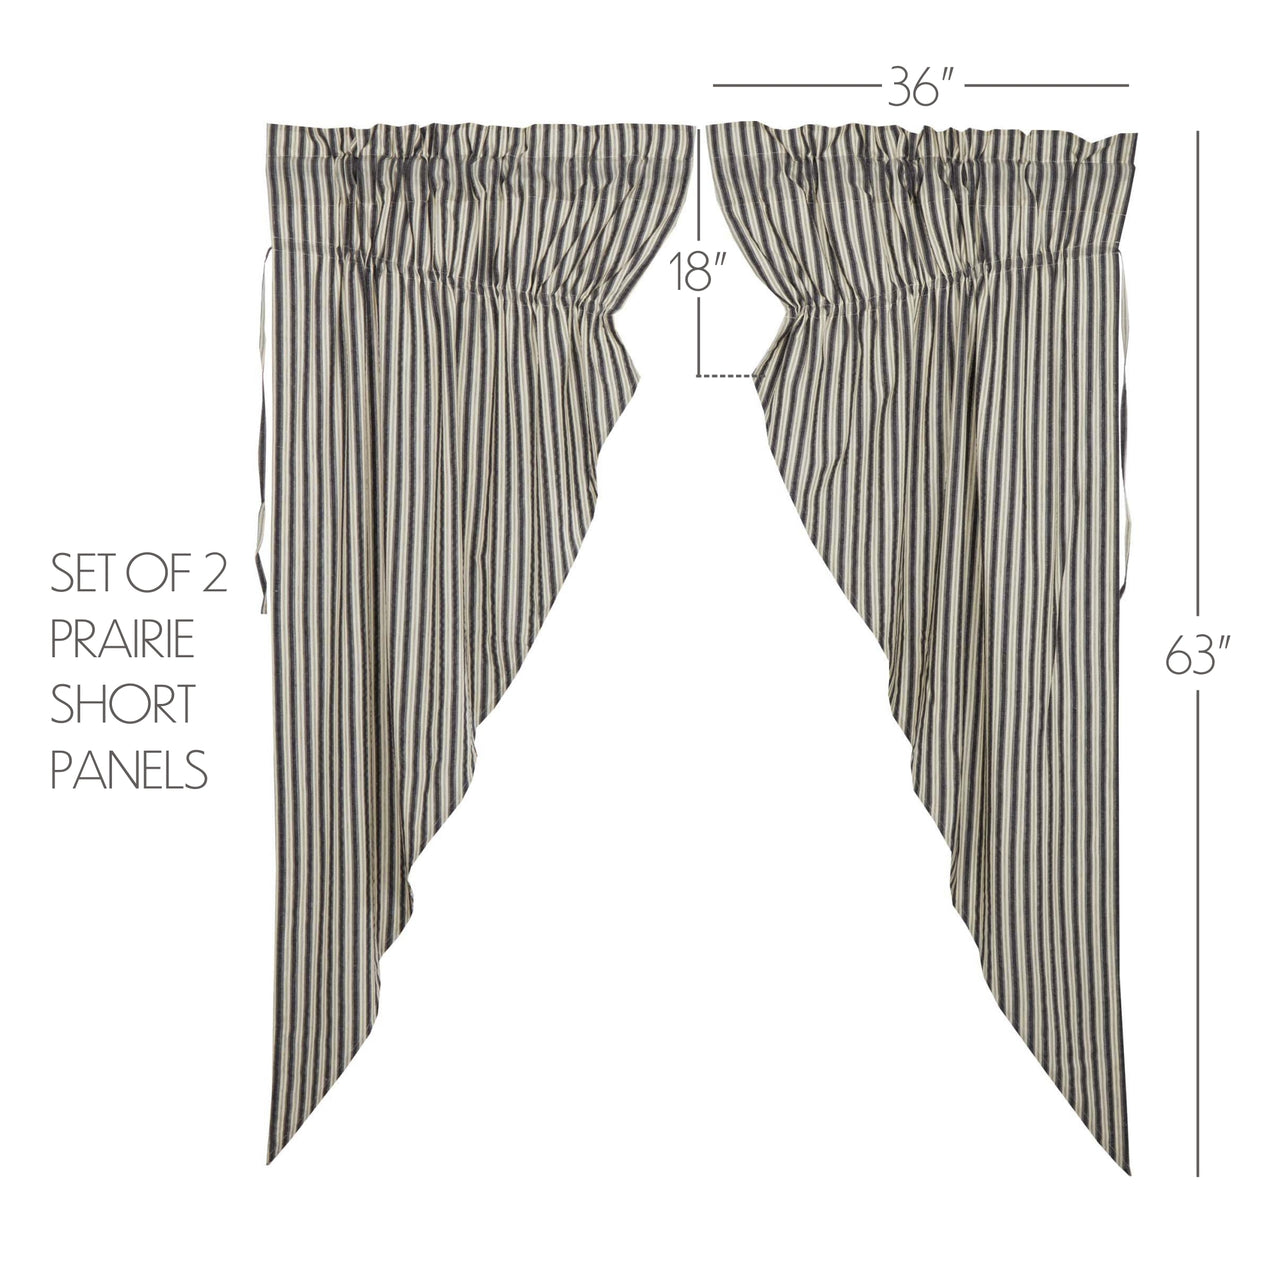 Ashmont Ticking Stripe Prairie Short Panel Set of 2 63x36x18 VHC Brands